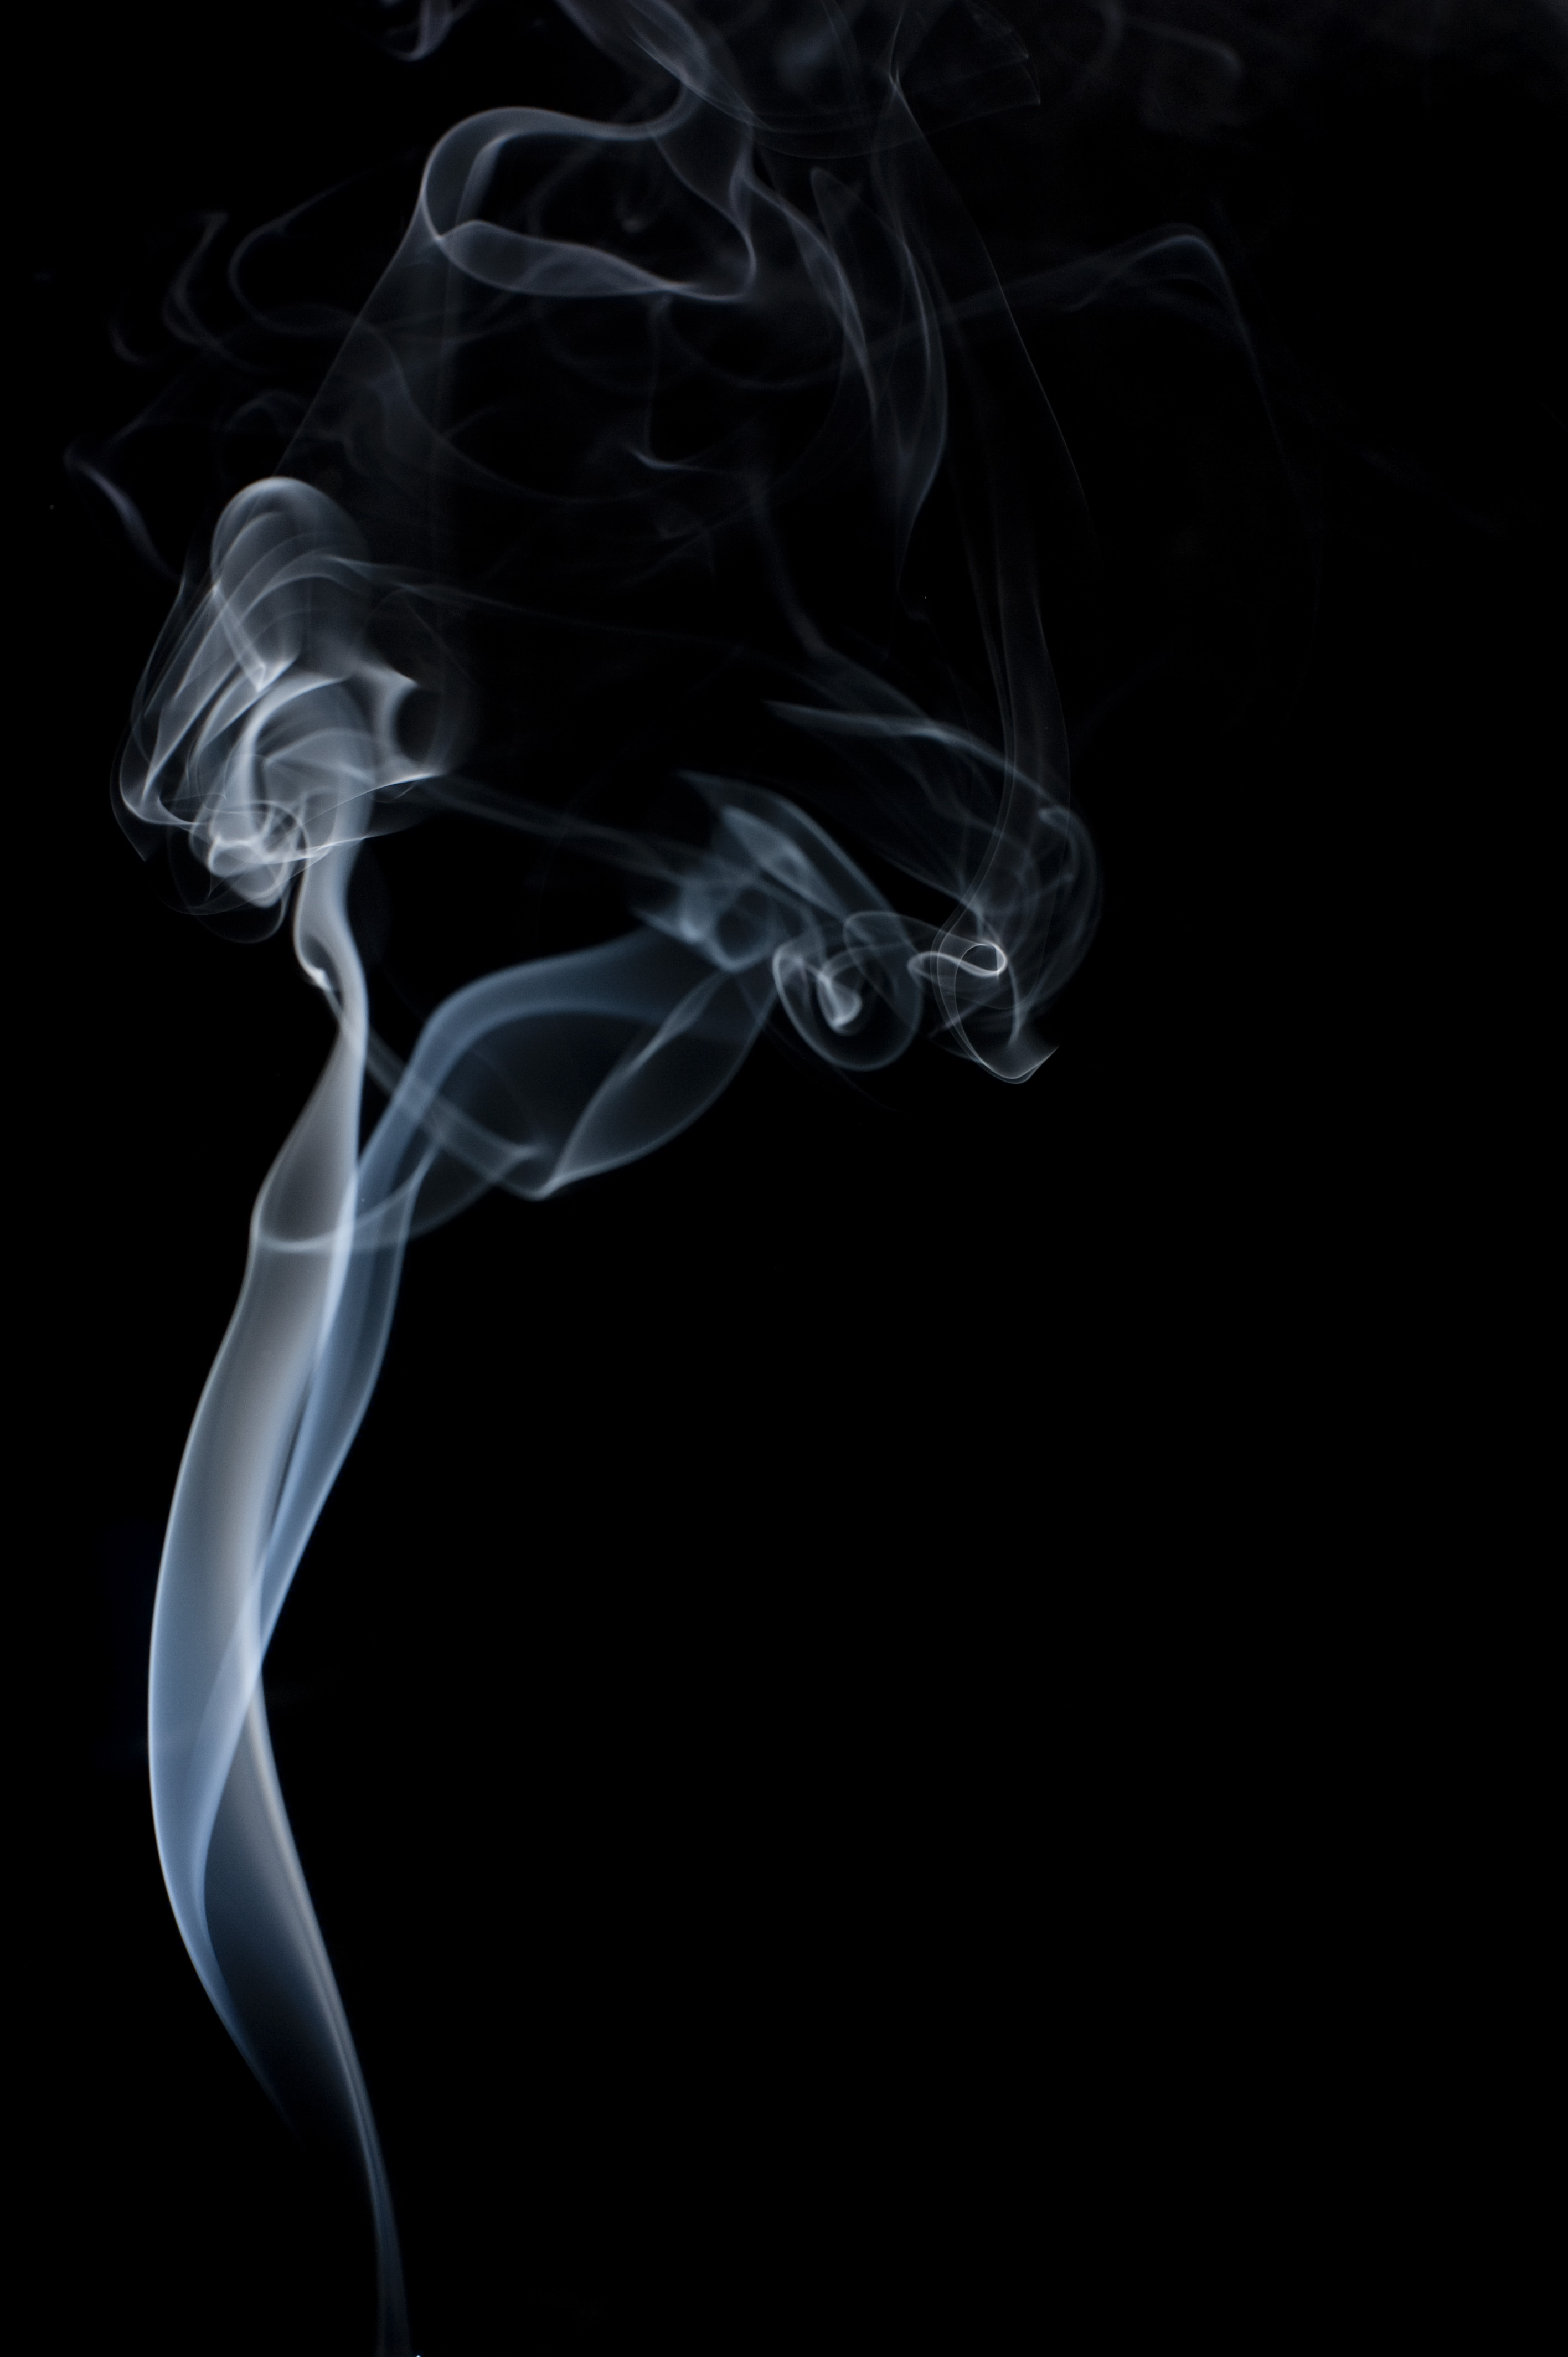 Top 999+ Boy Smoke Wallpaper Full HD, 4K✓Free to Use